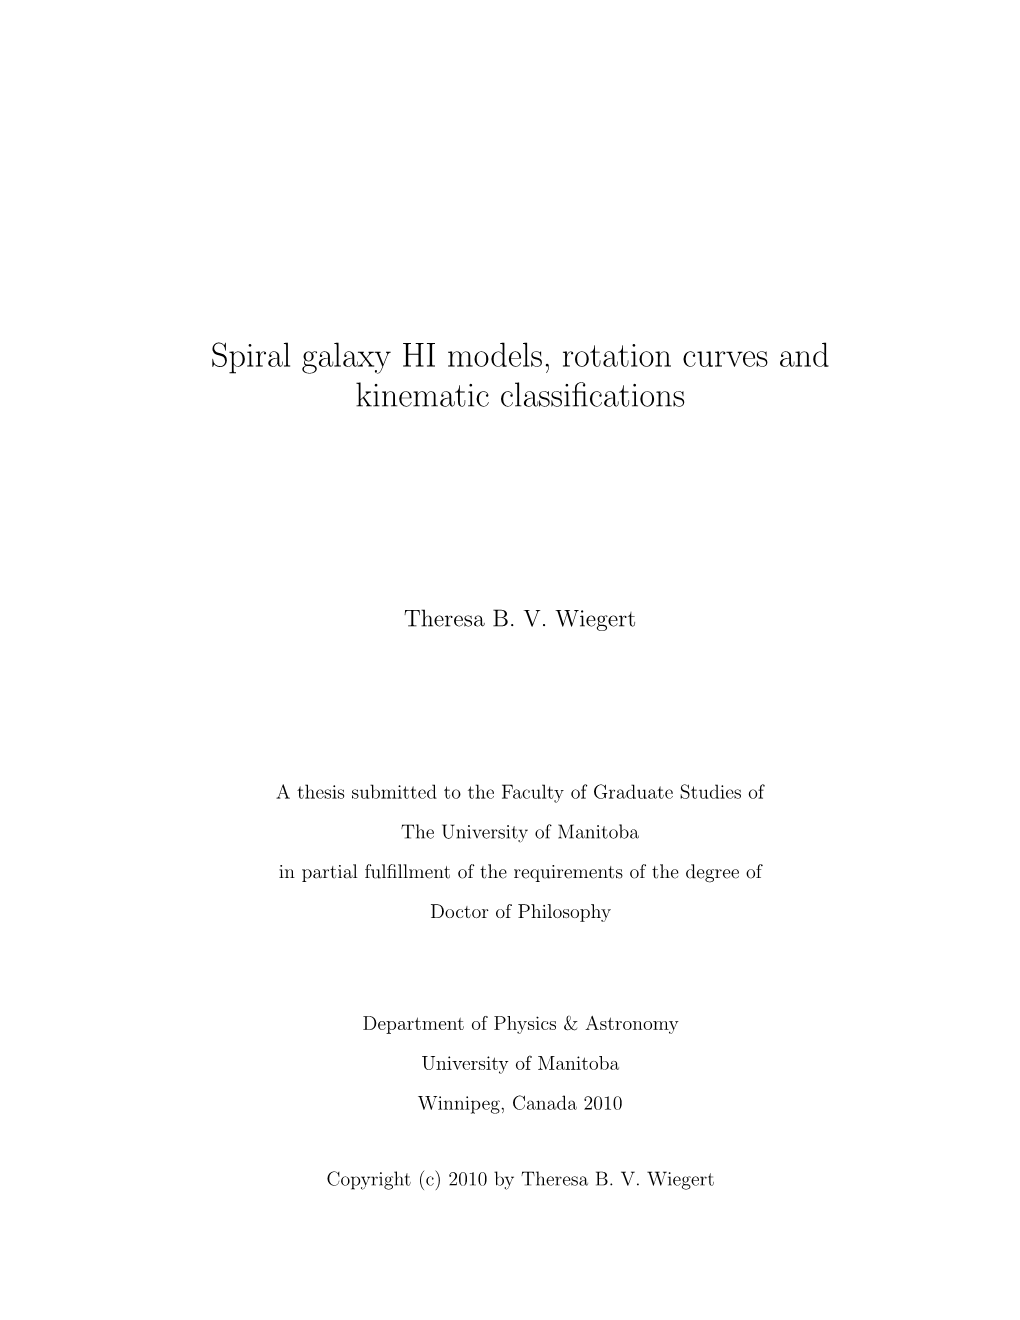 Spiral Galaxy HI Models, Rotation Curves and Kinematic Classifications